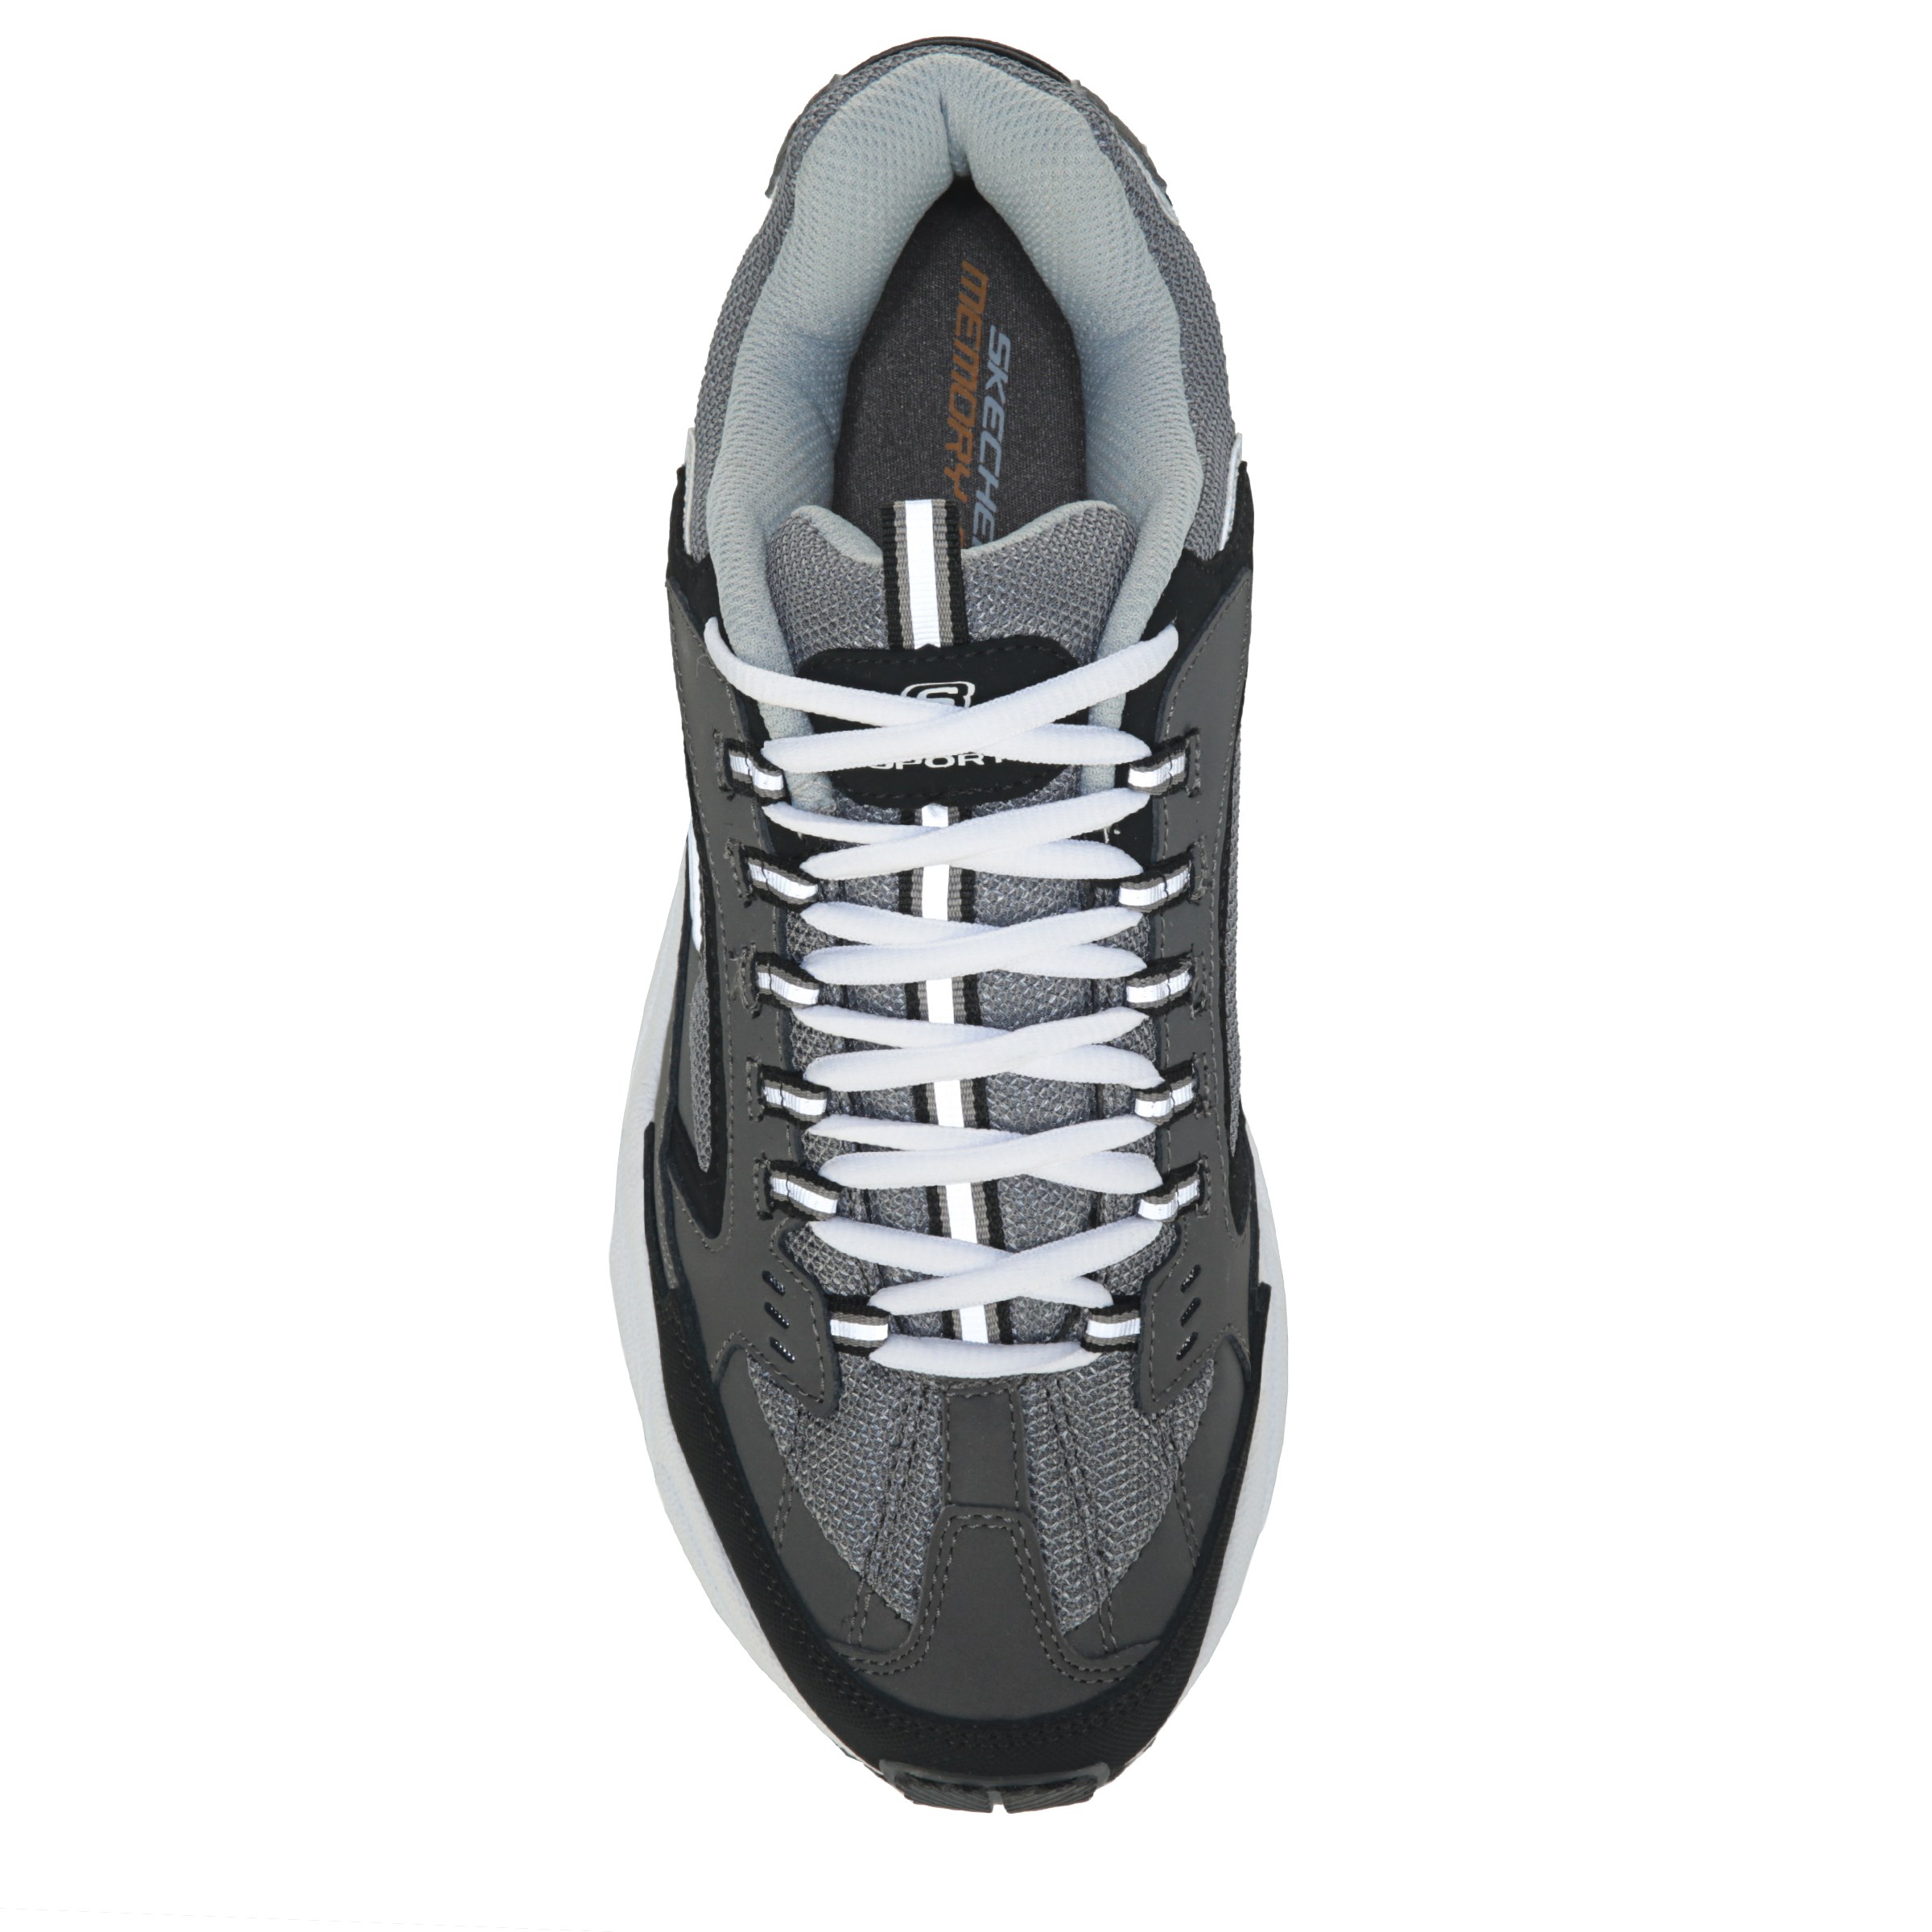 Skechers Men's Stamina Cutback Memory Foam X-Wide Sneaker